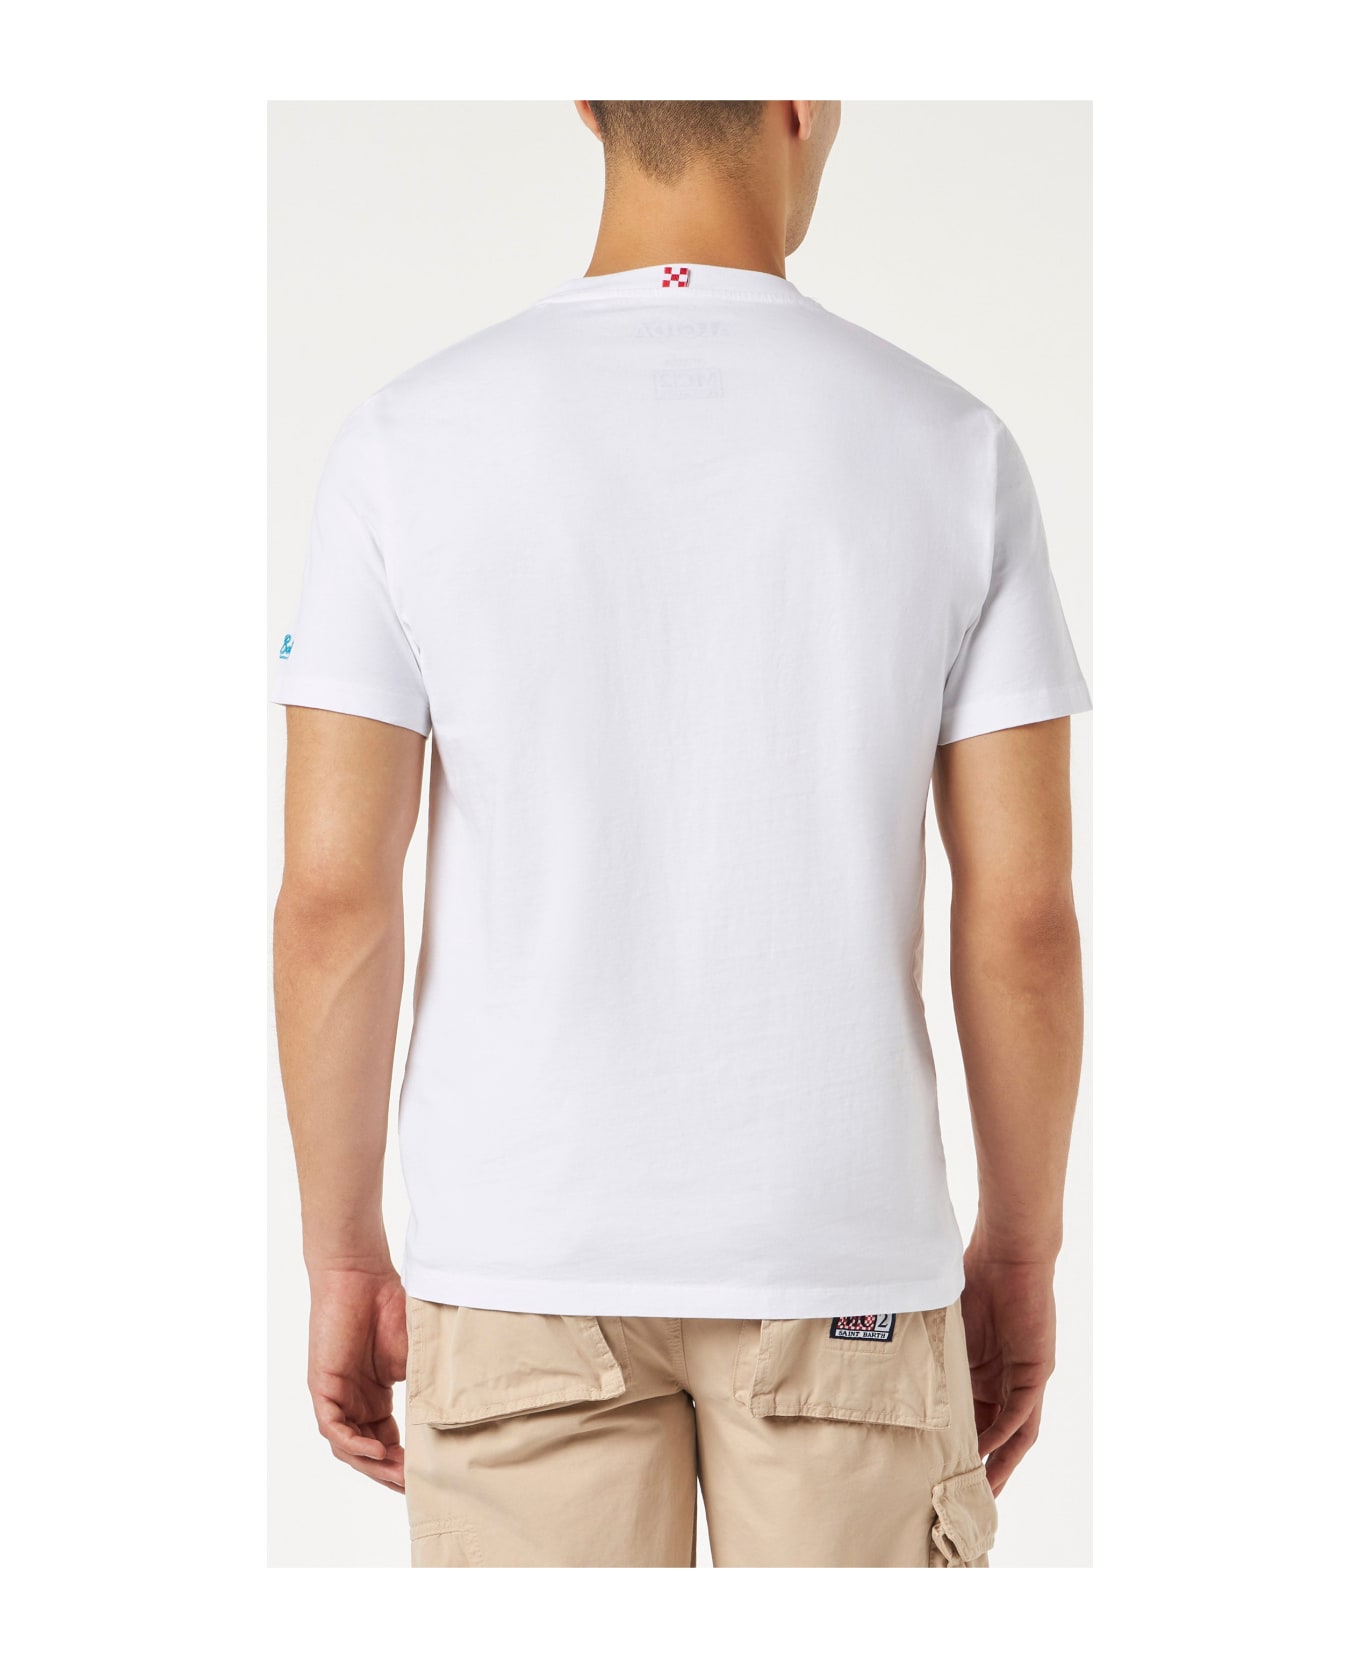 MC2 Saint Barth Cotton T-shirt With Calippo Anyone? Embroidery| Algida® Special Edition - WHITE